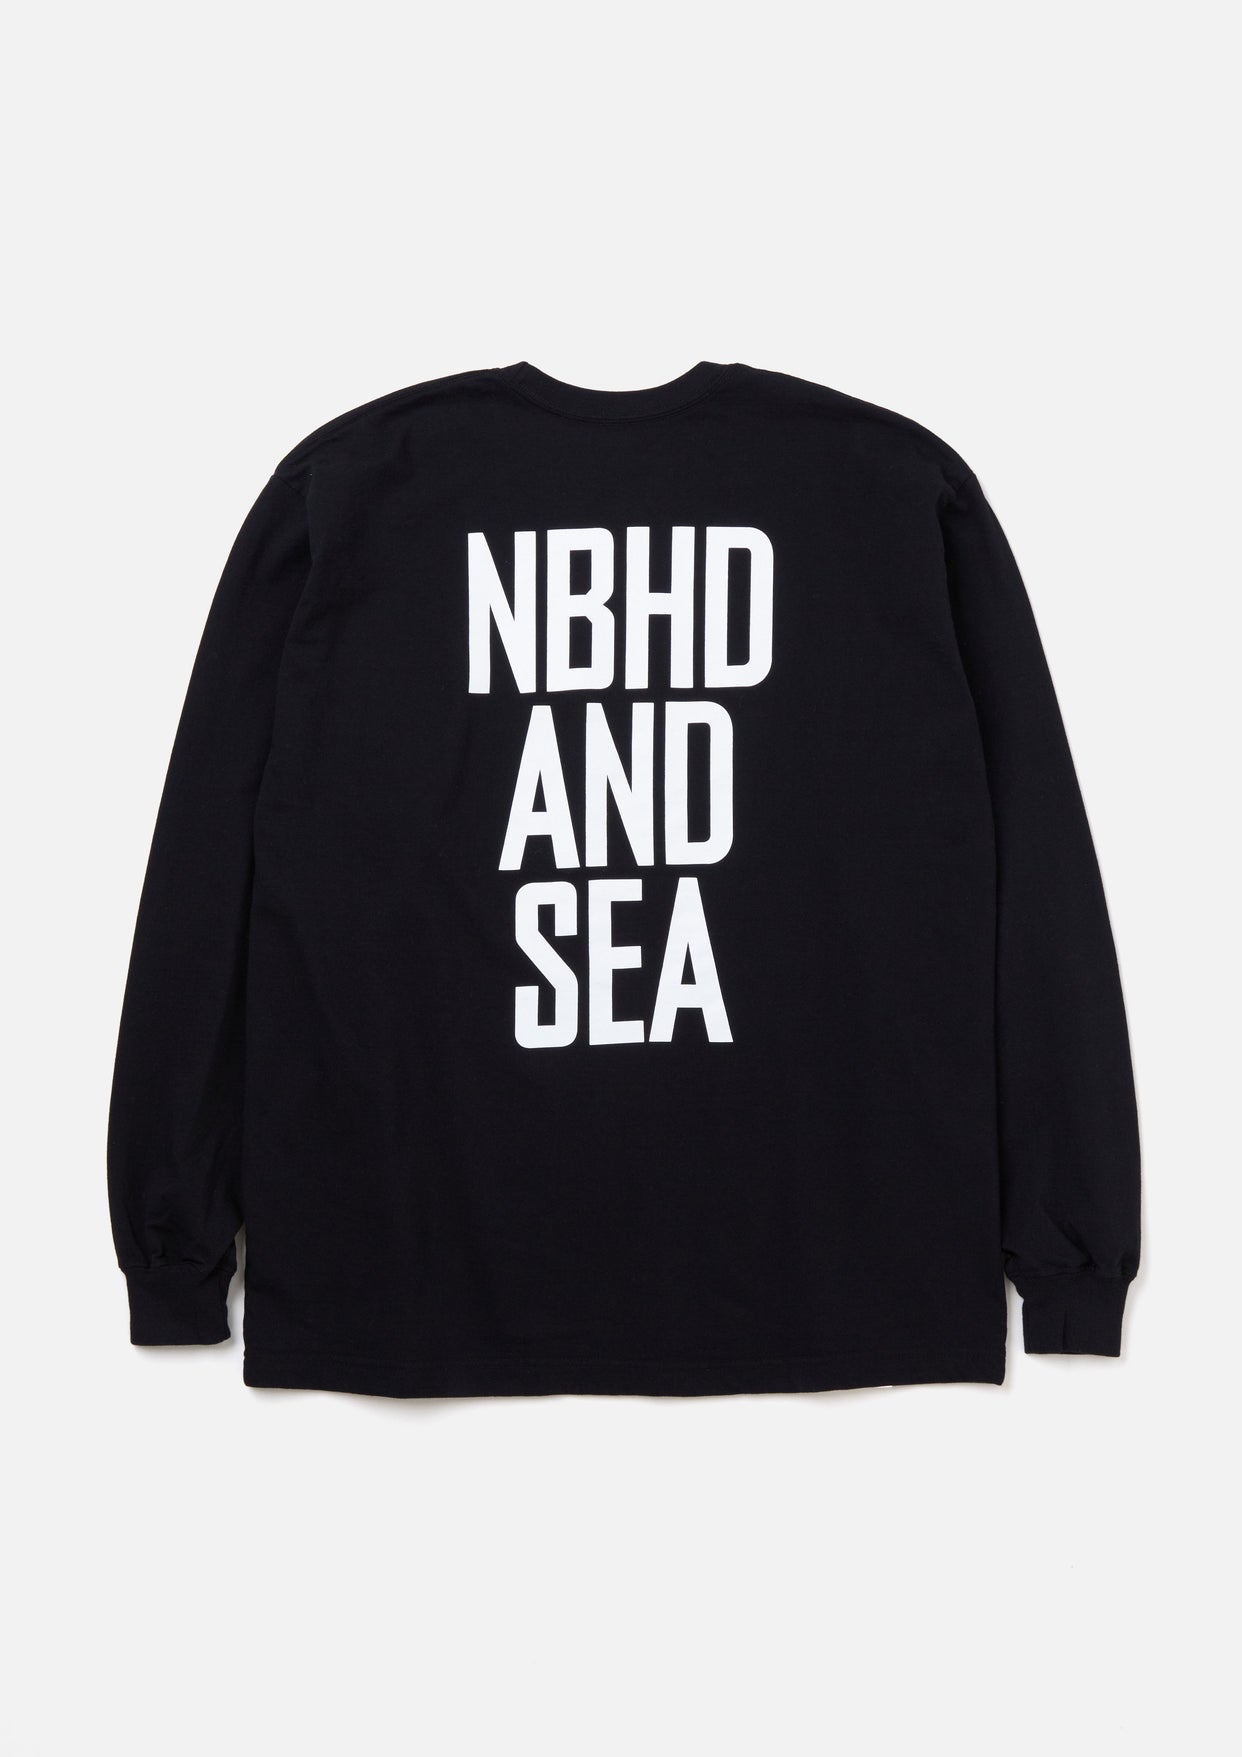 WIND AND SEA x NEIGHBORHOOD shirts XL | myglobaltax.com